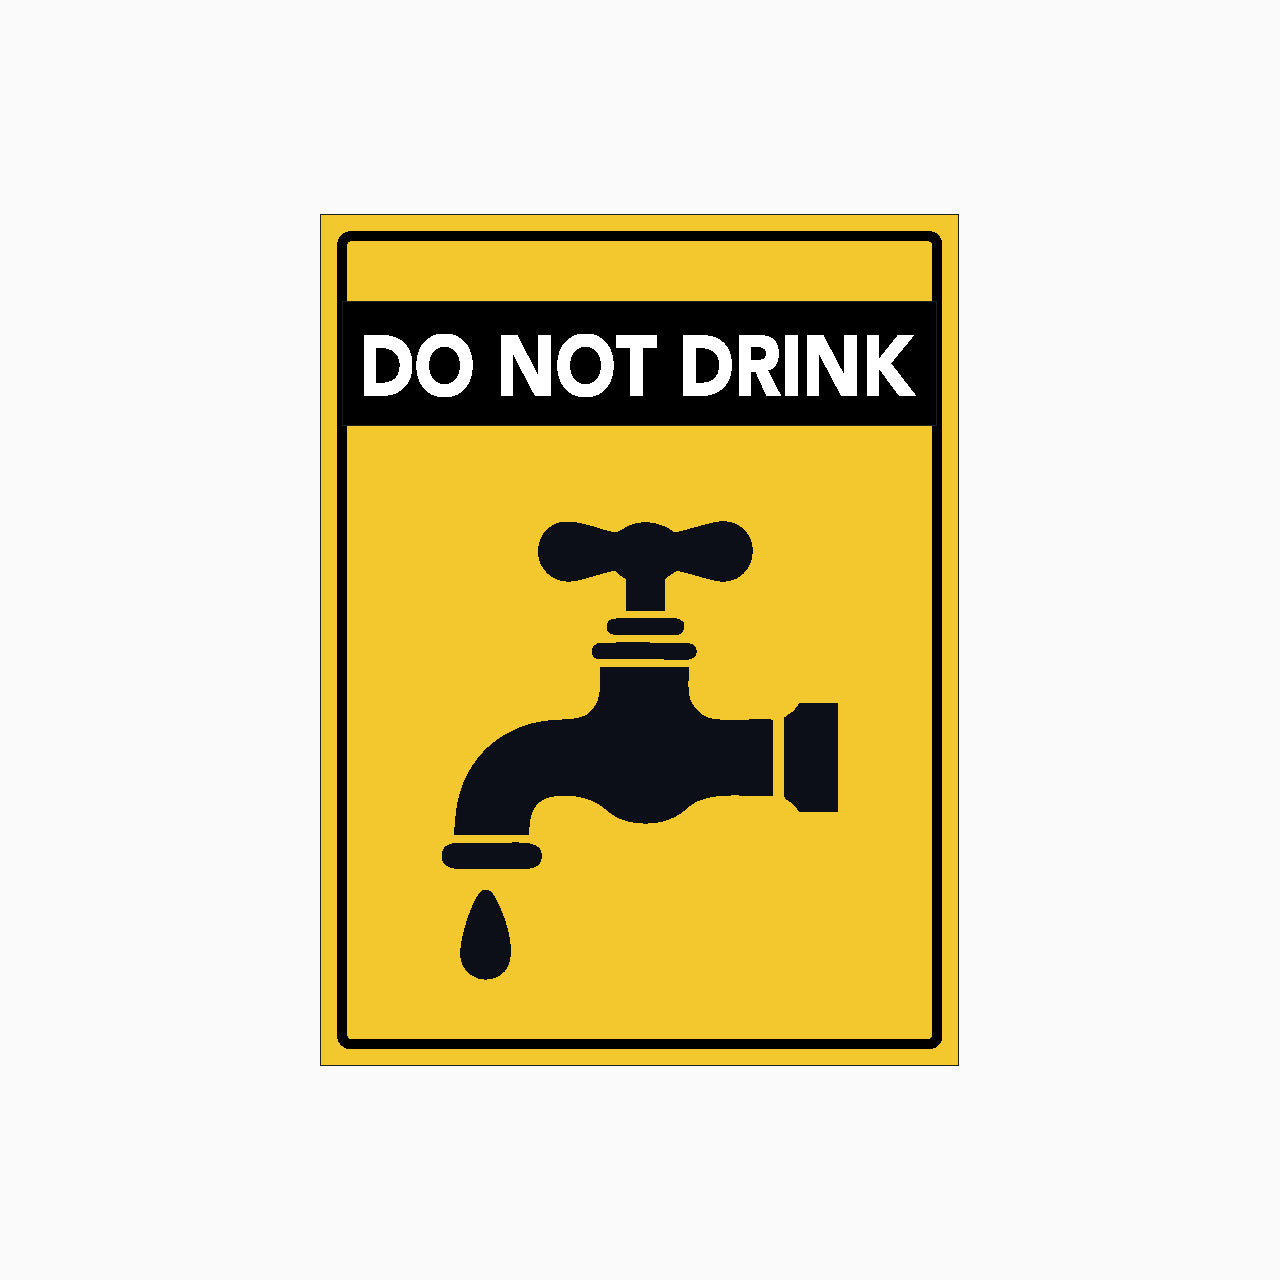 DO NOT DRINK - SAFETY SIGN - GET SIGN